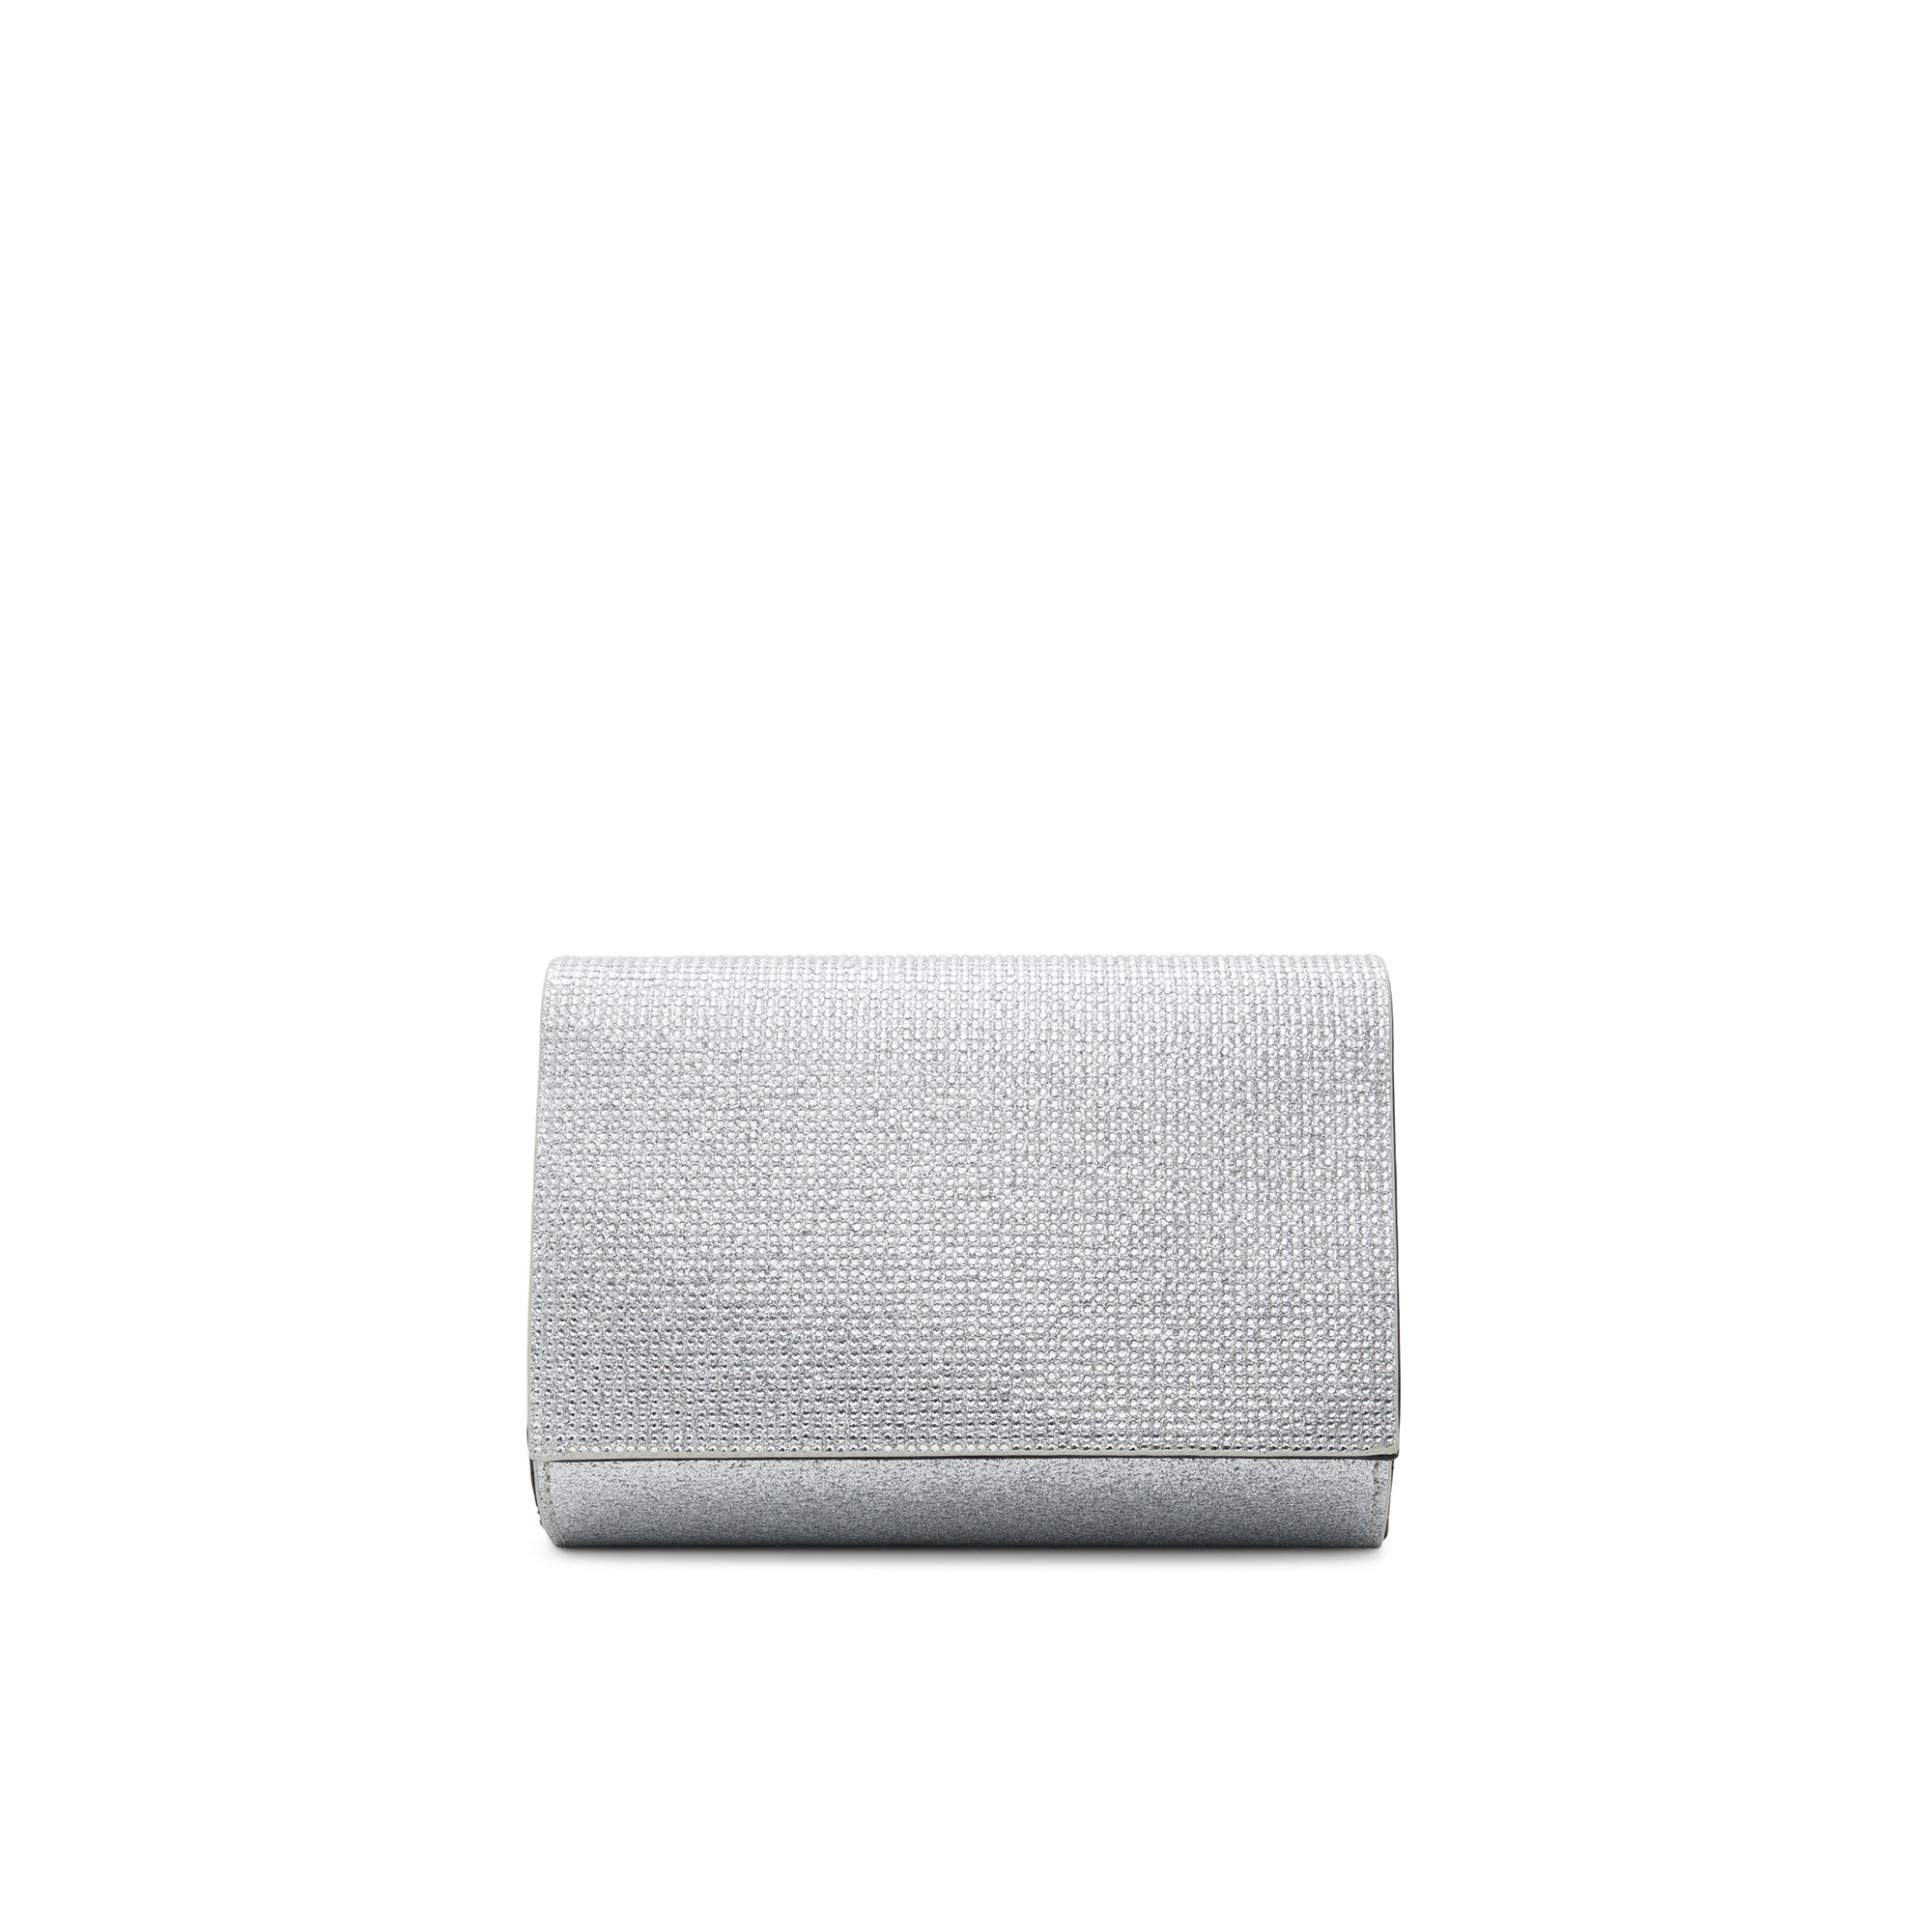 K Studio Cherican - Women's Handbags Clutches - Silver photo